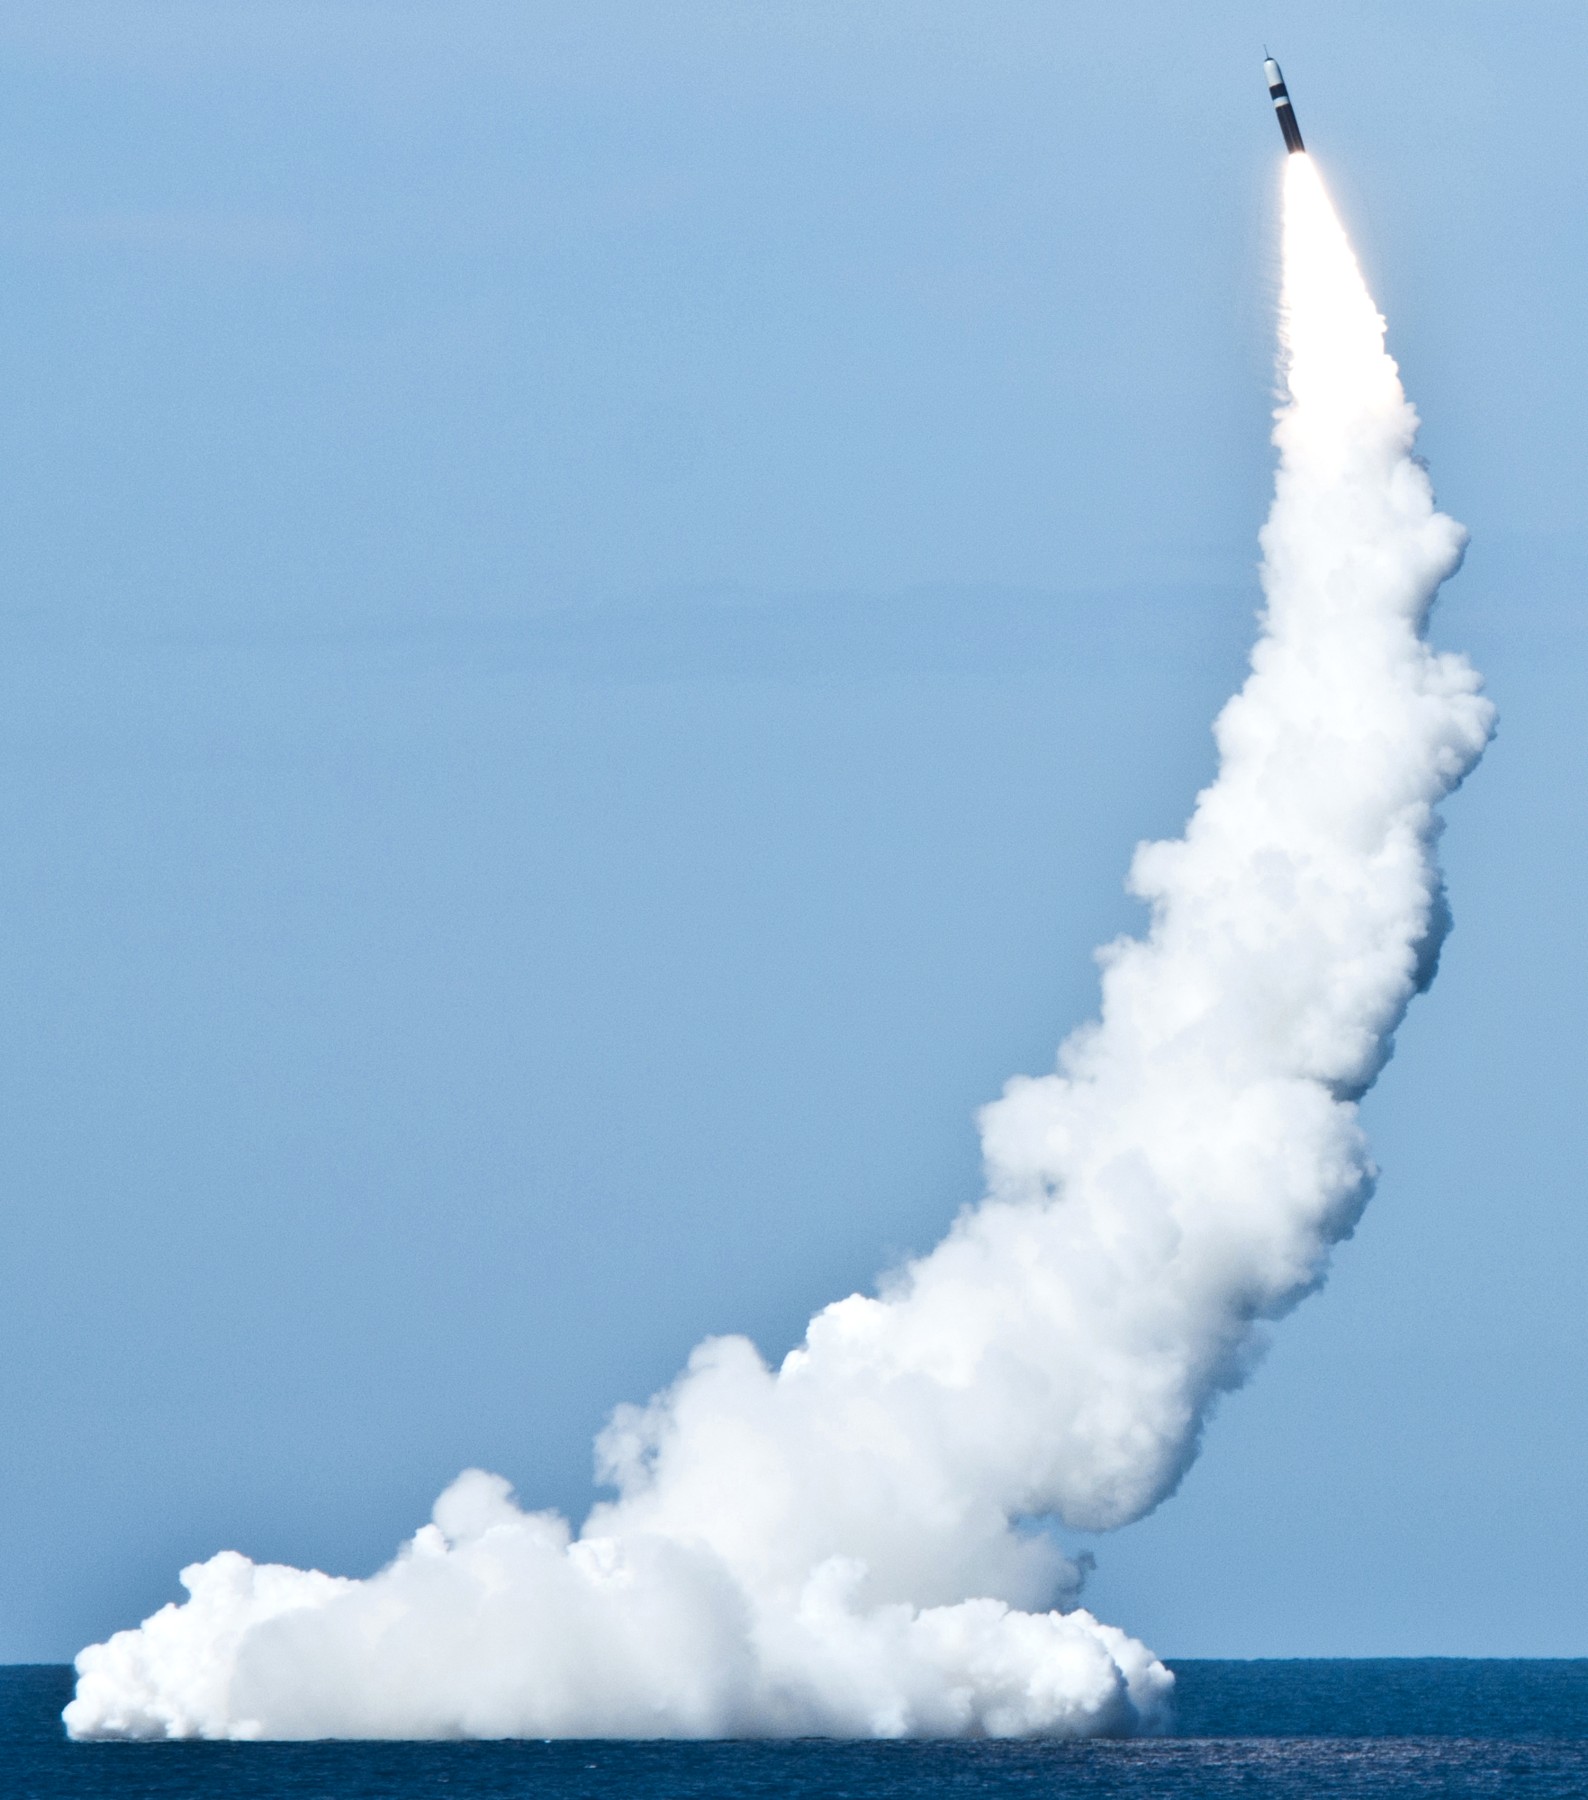 ssbn-733 uss nevada ohio class ballistic missile submarine 2011 14 ugm-133a trident ii d5 slbm missile